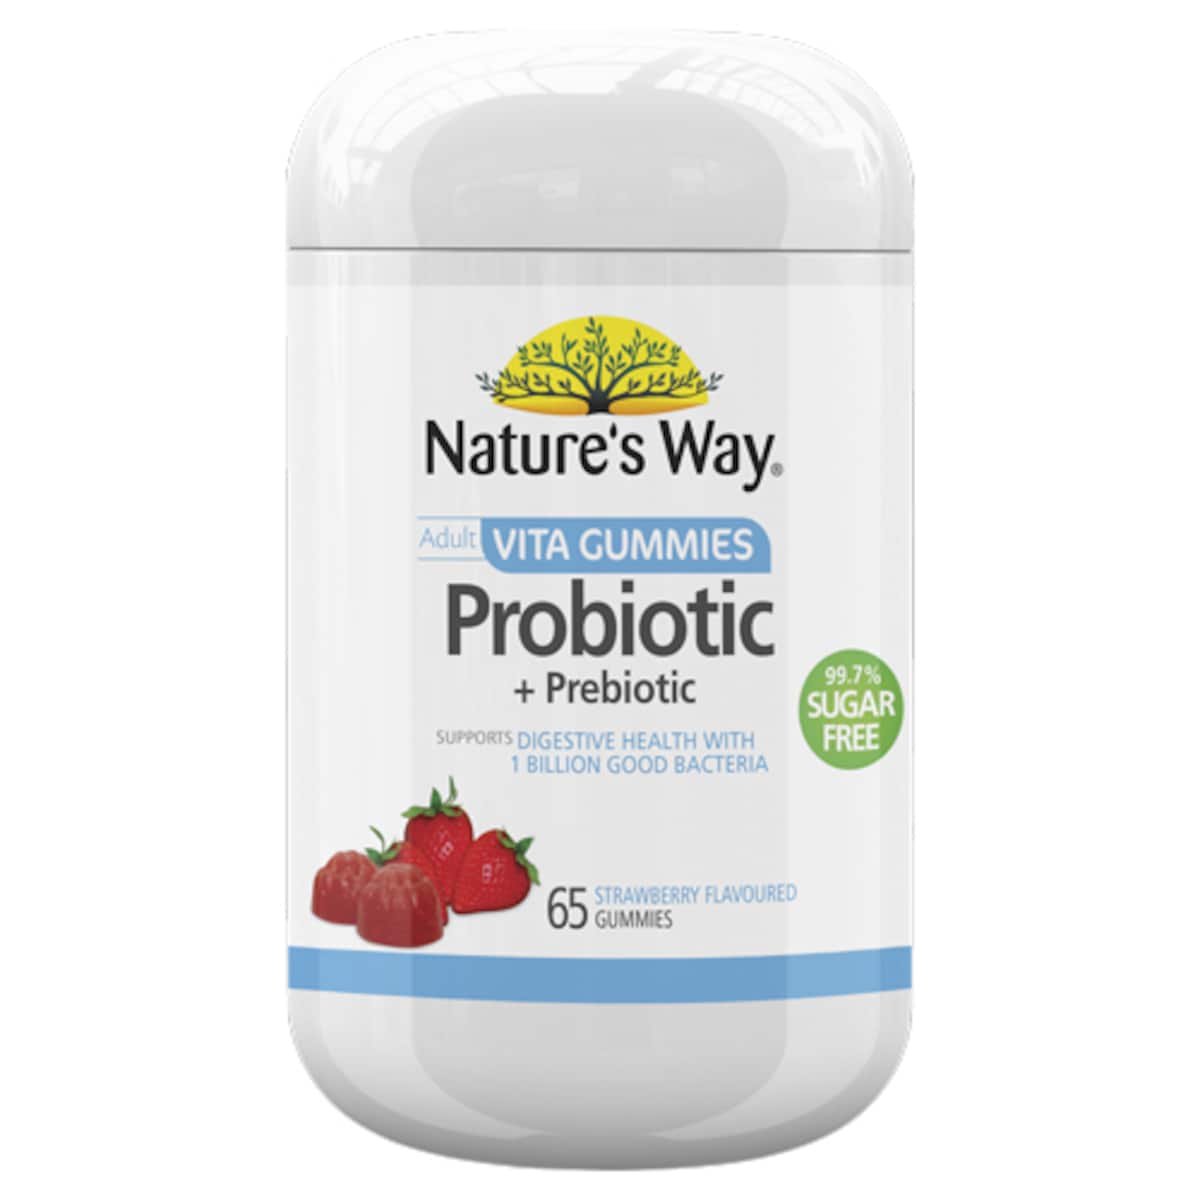 Natures Way Adult Vita Gummies Probiotic + Prebiotic Sugar Free 65 Pack